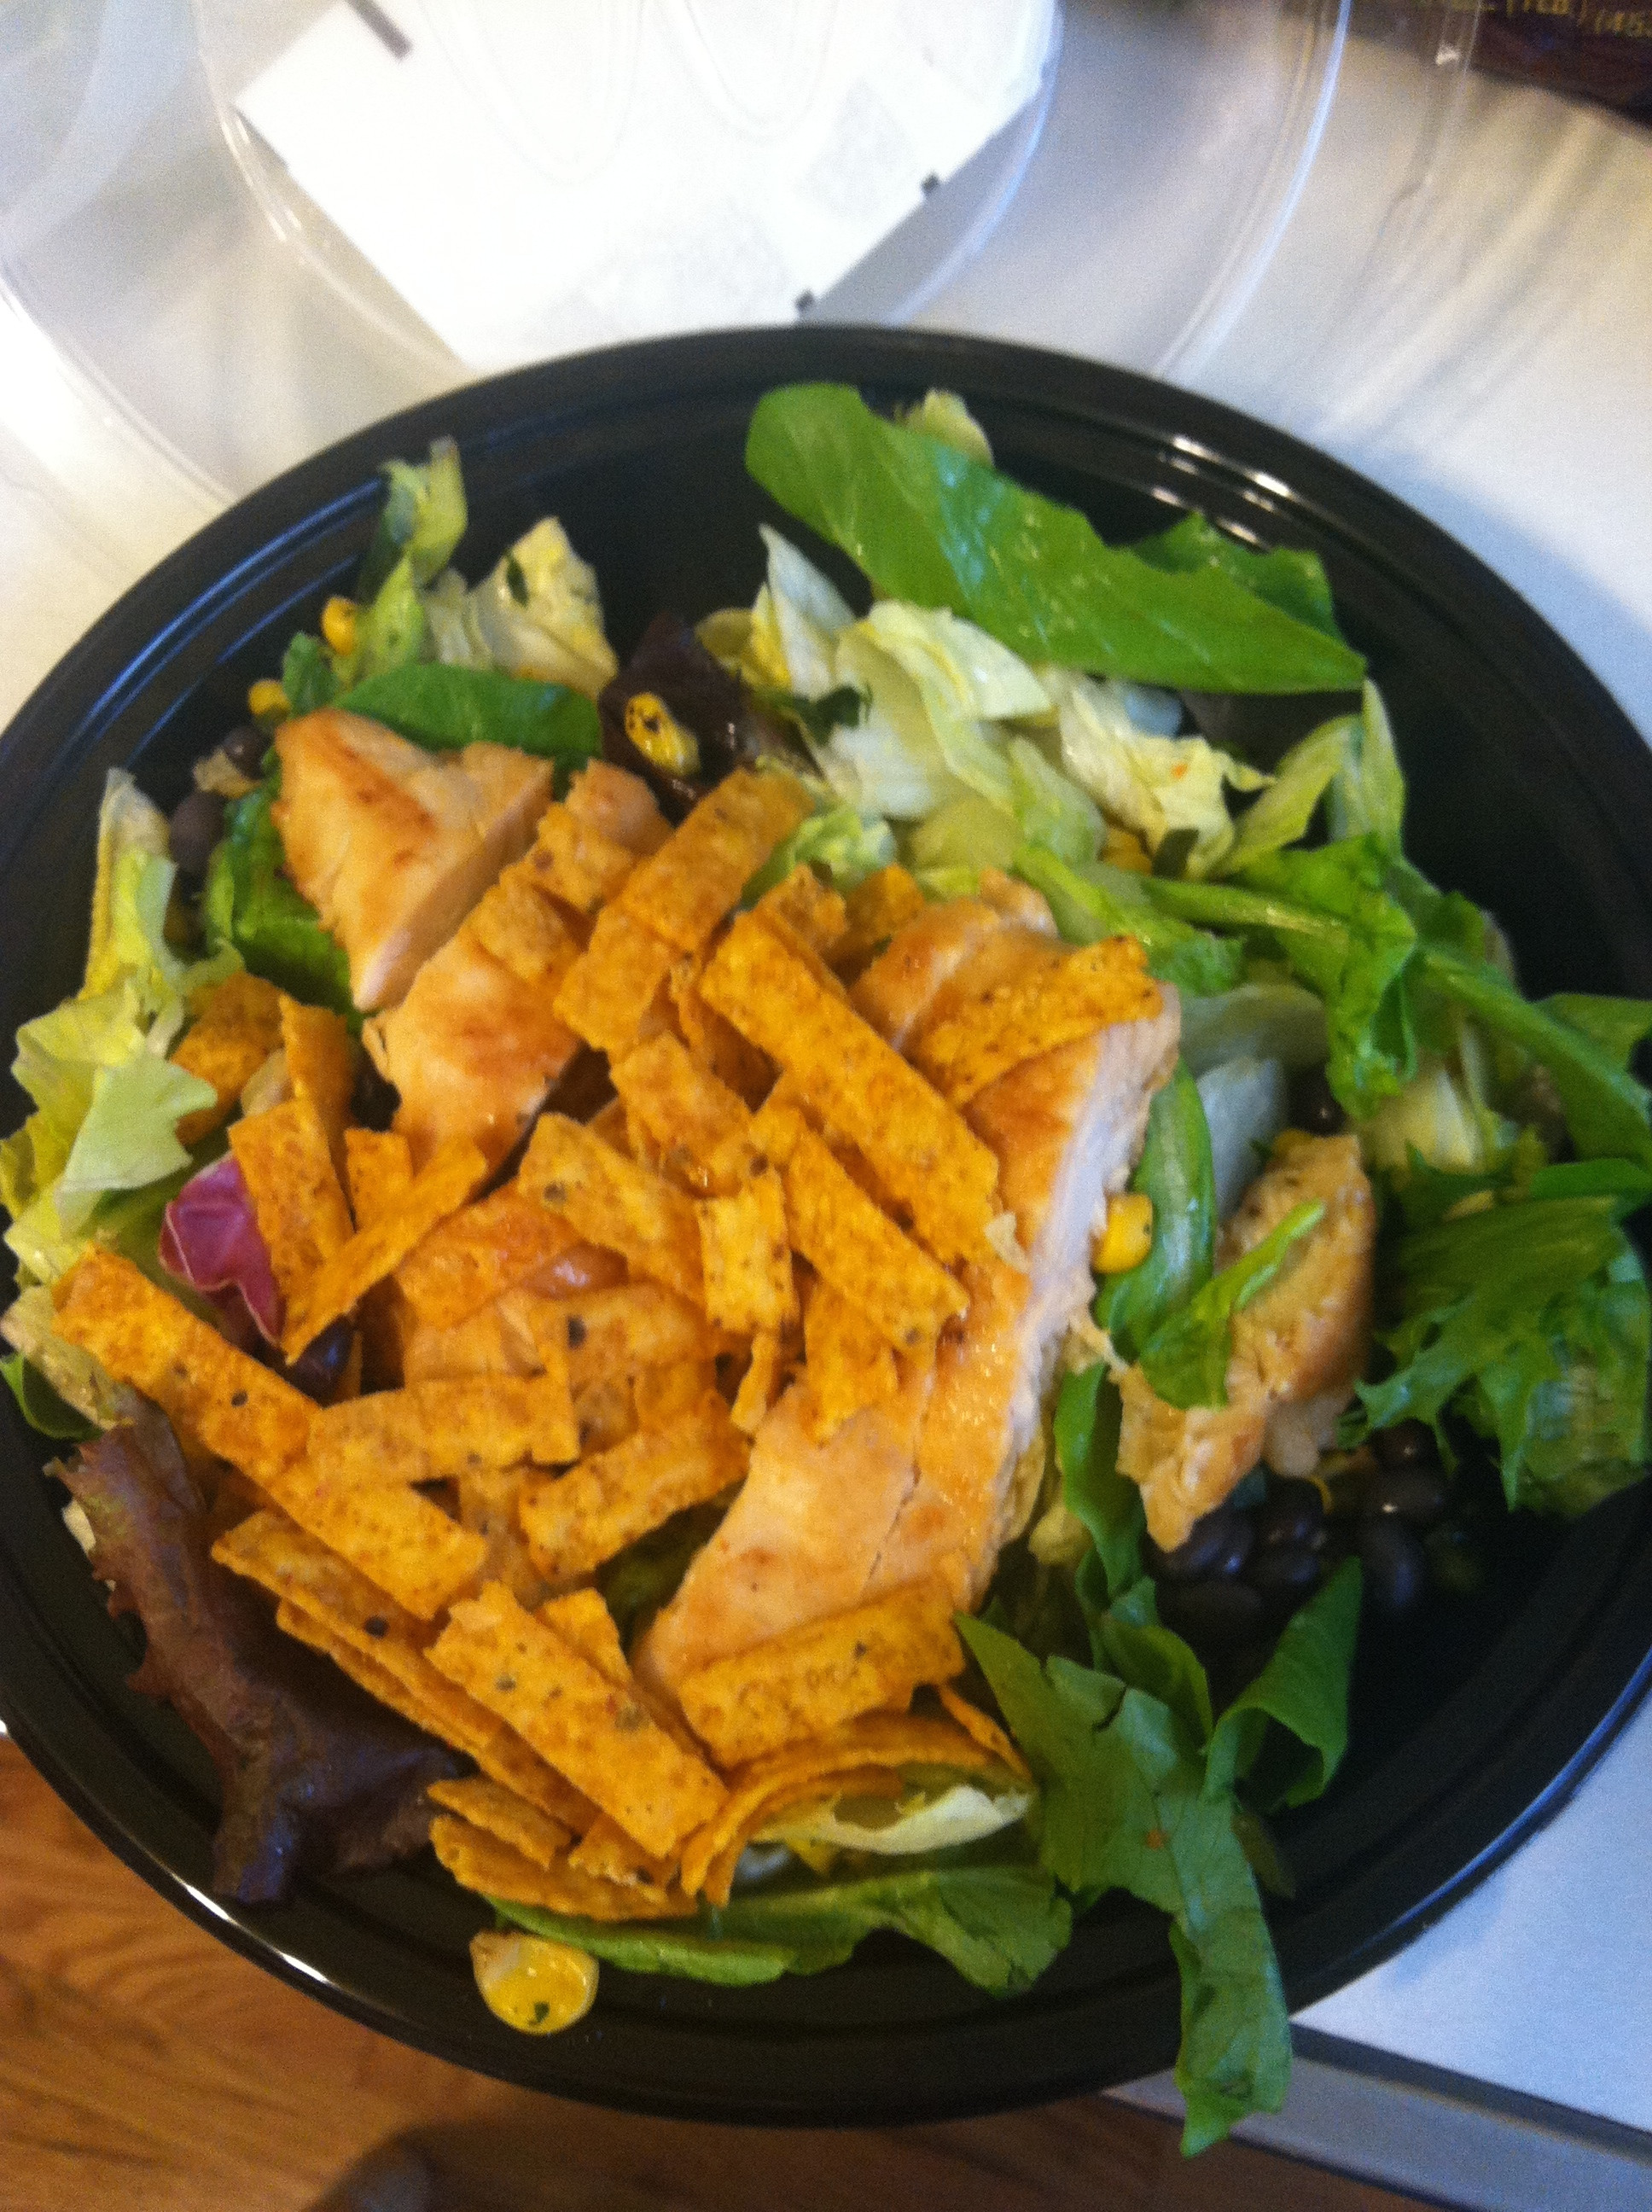 Mcdonalds Salads Healthy
 I think I found something healthy at McDonald’s